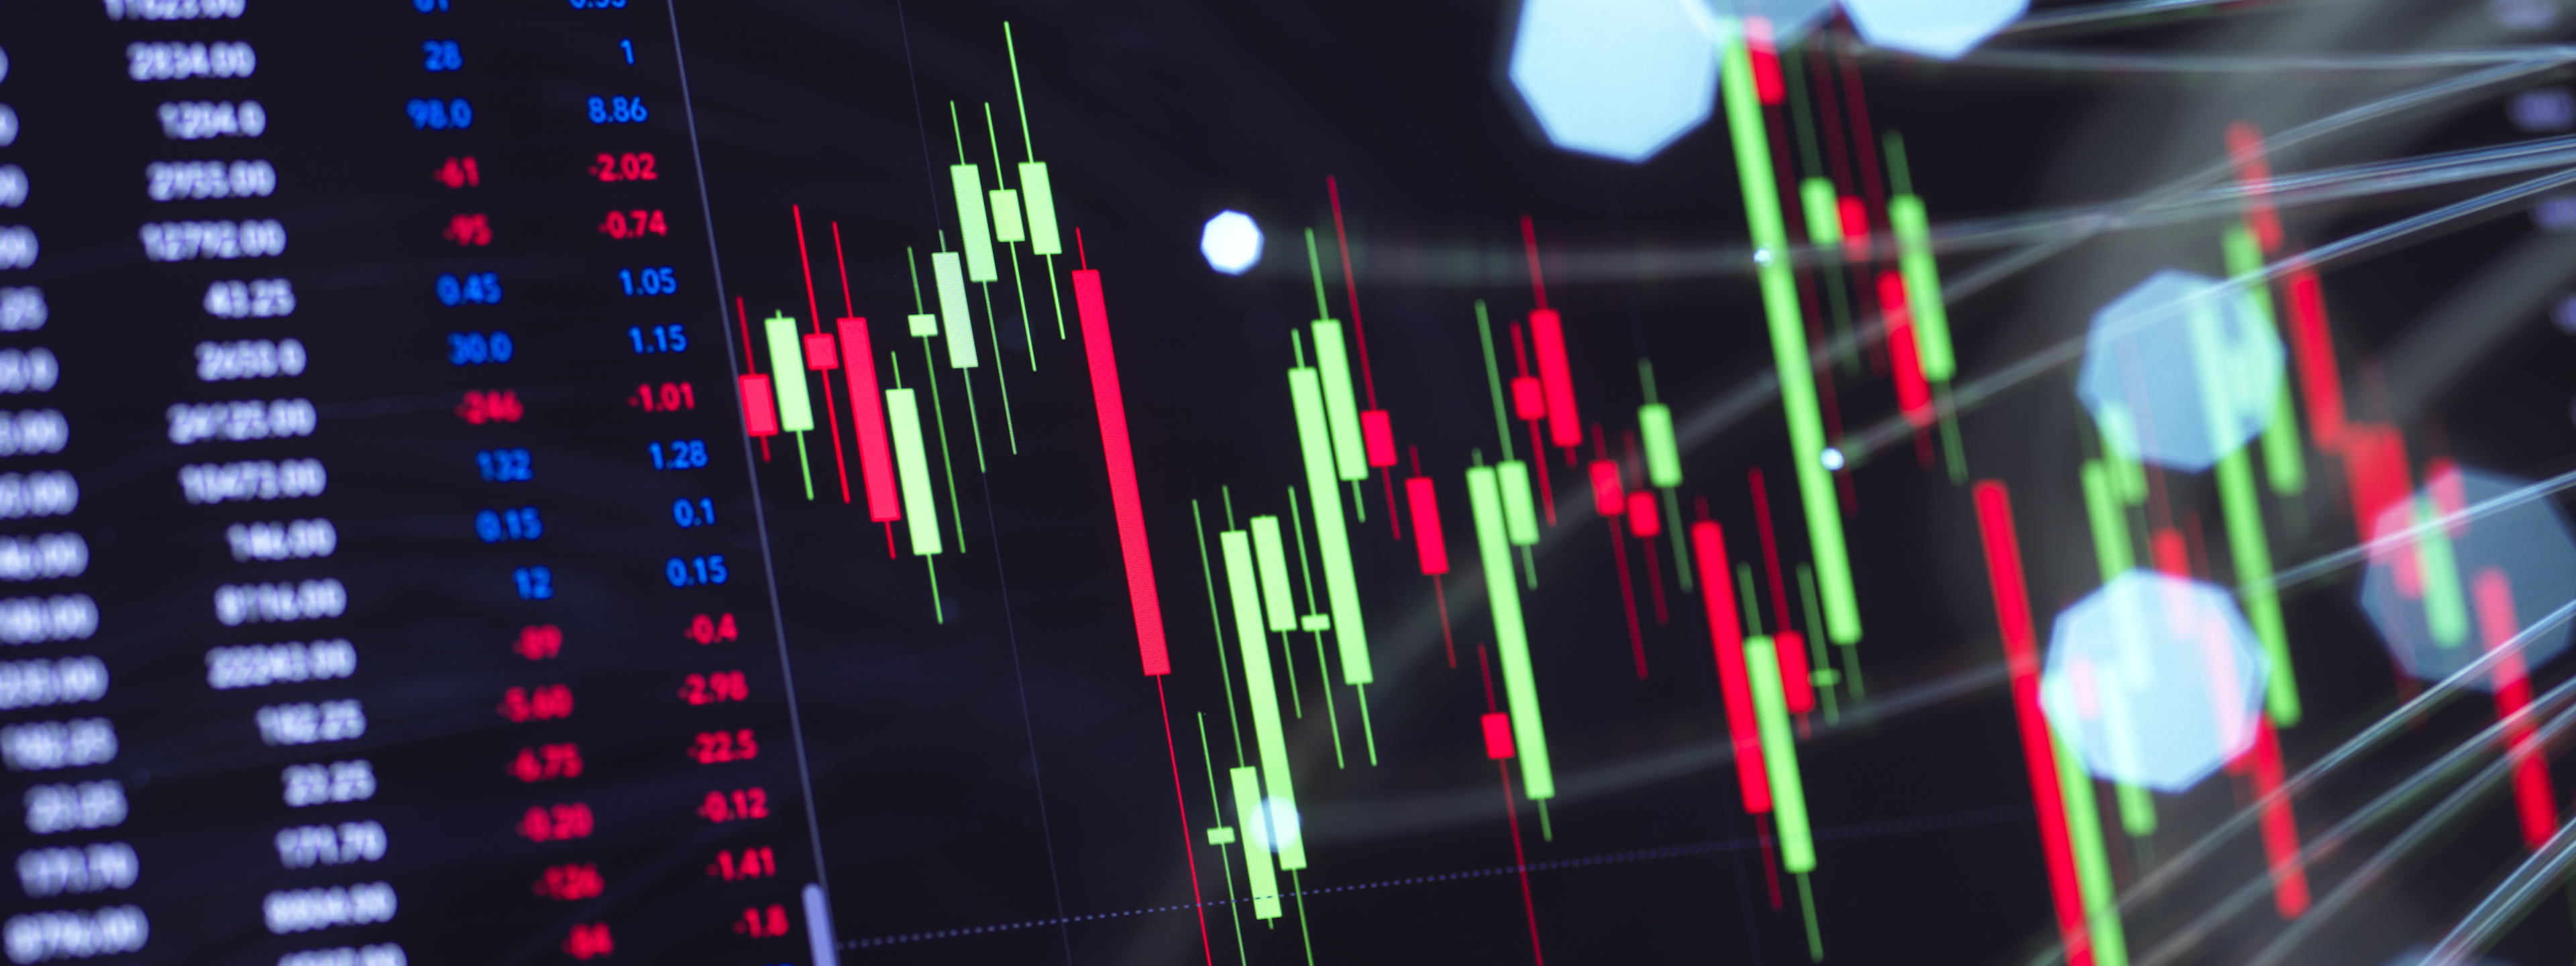 AI Financial Services, Fibre optics carrying data updating stock market information.